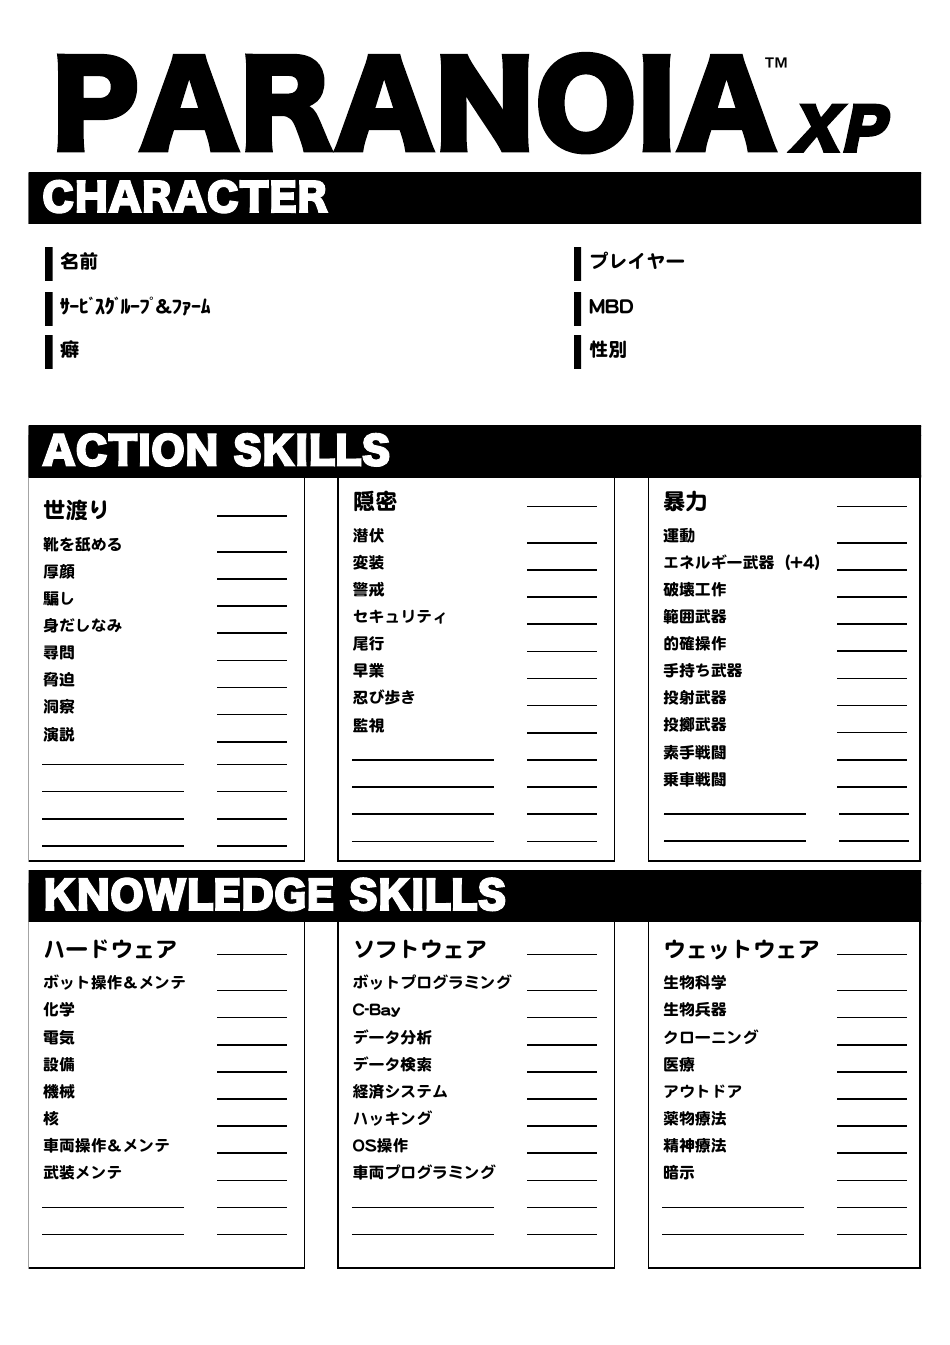 Paranoia XP Character Sheet (Japanese)